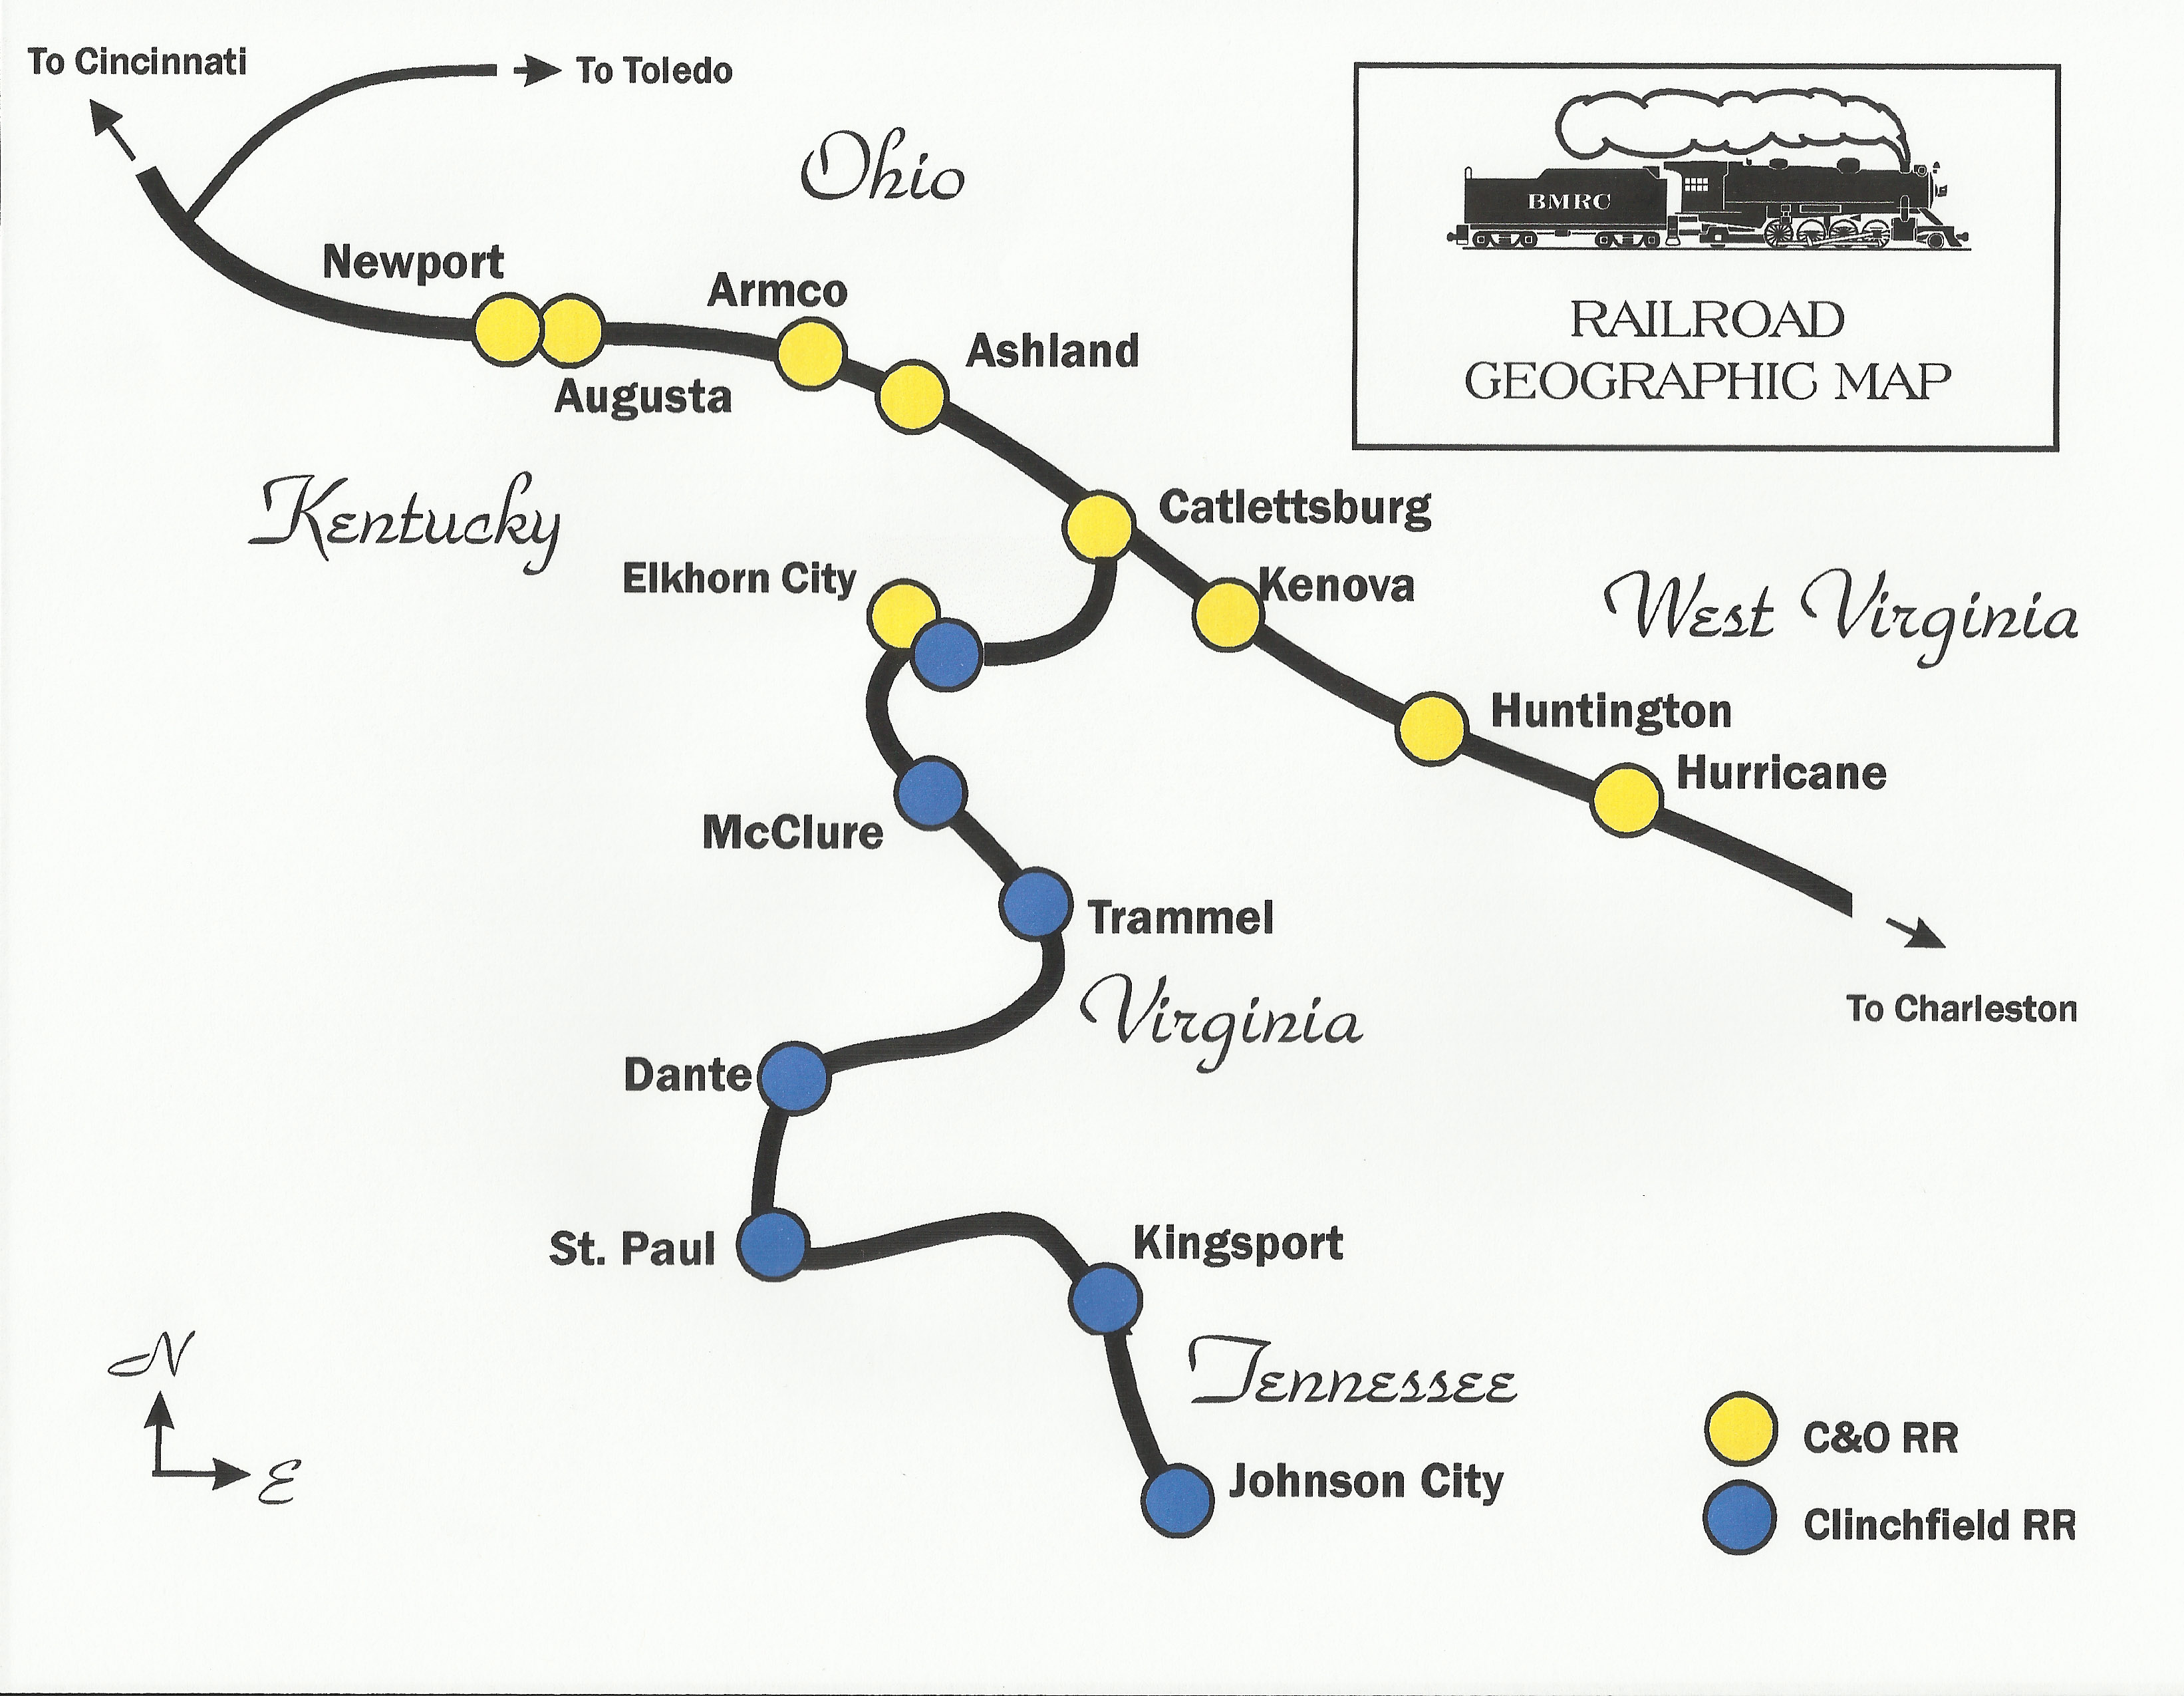 C&O Elkhorn City to Cincinnati track chart 1983 RailfanDepot PDF on CD 